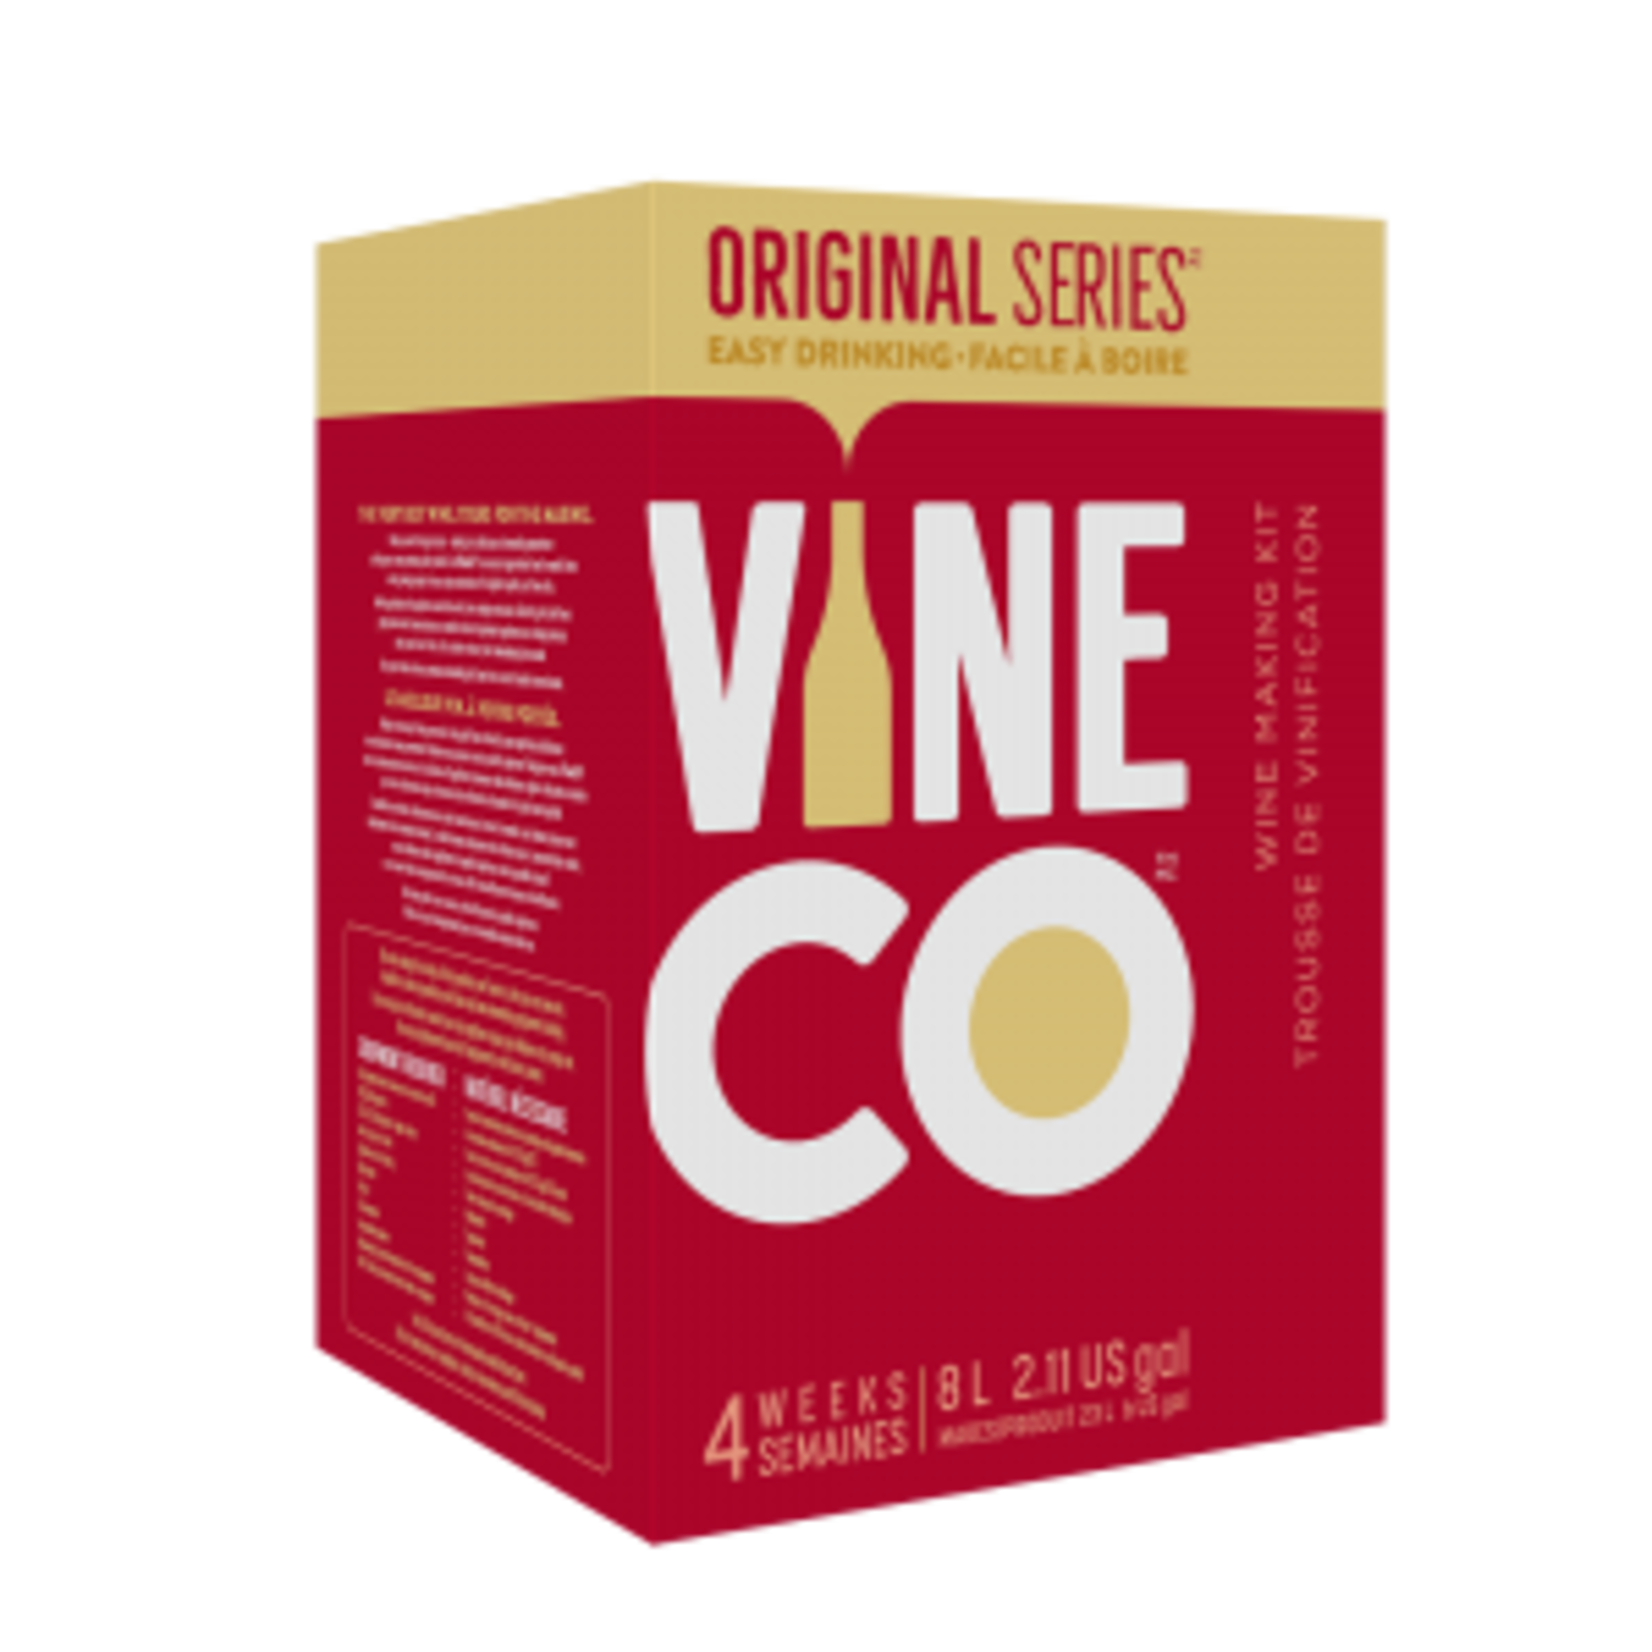 Vine Co. Original Series Riesling (Wine Kit), Washington